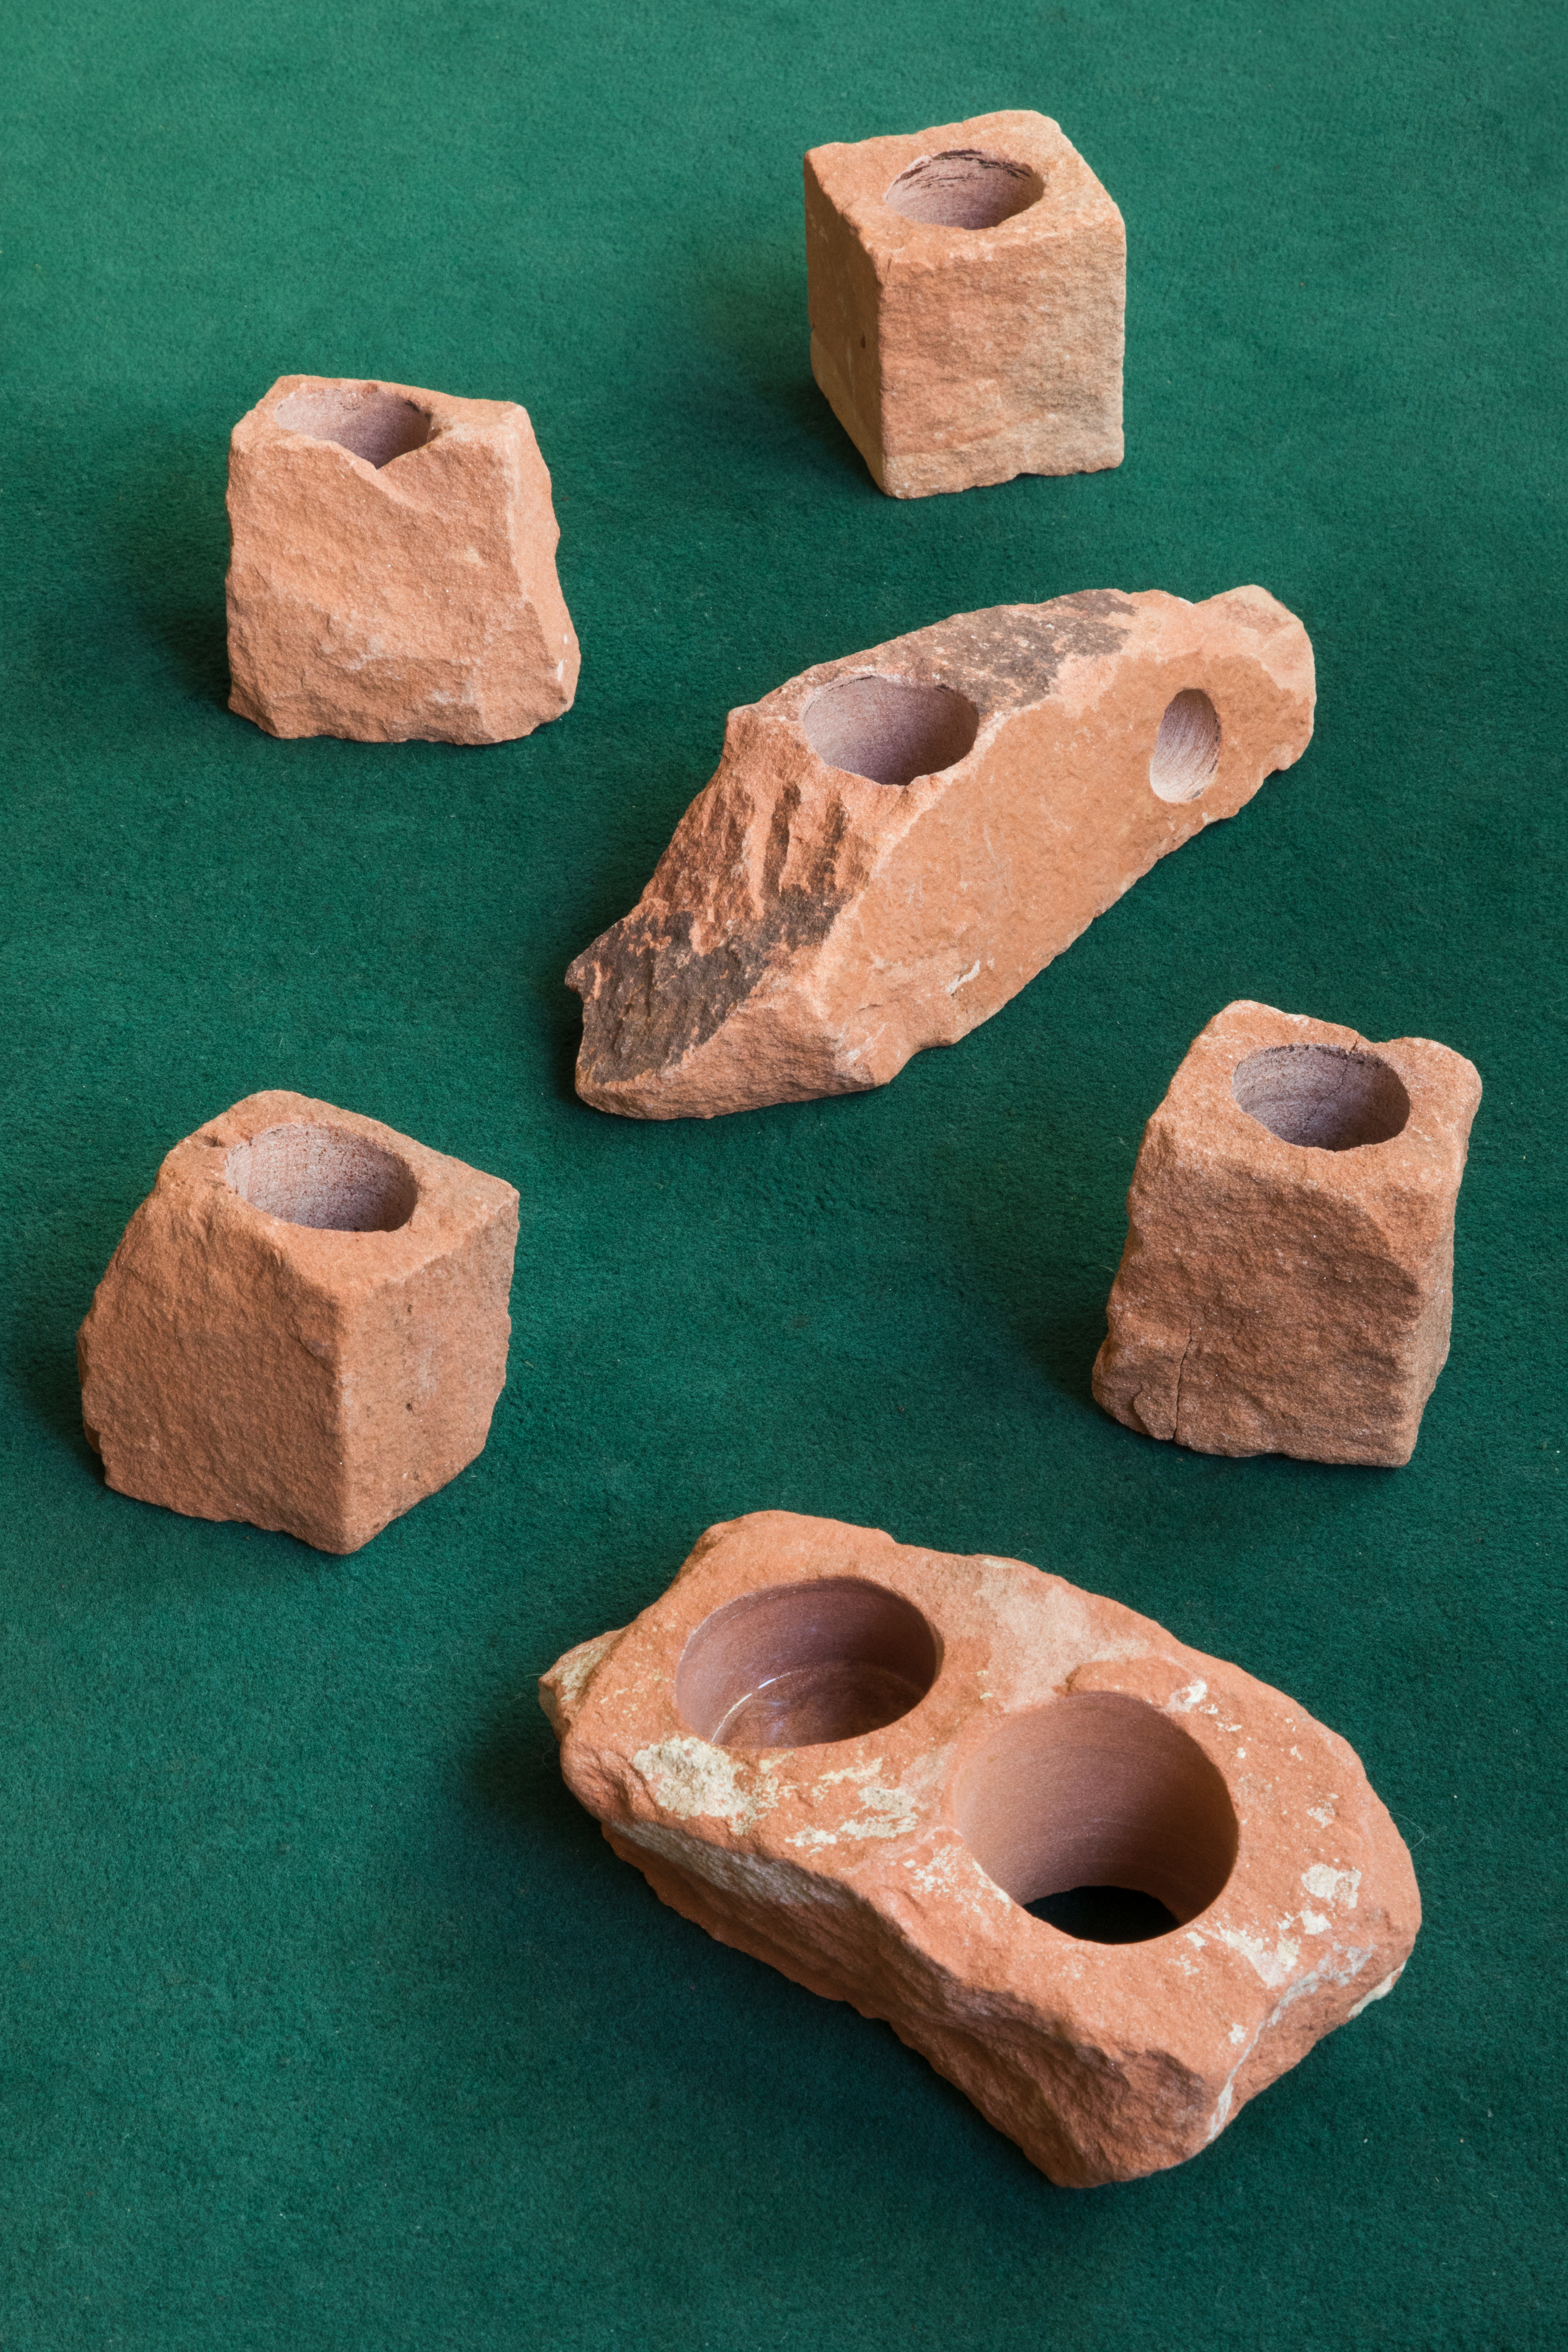 Felix Plachtzik, *Sandstone Cups*, sandstone, glazed & fired, various sizes